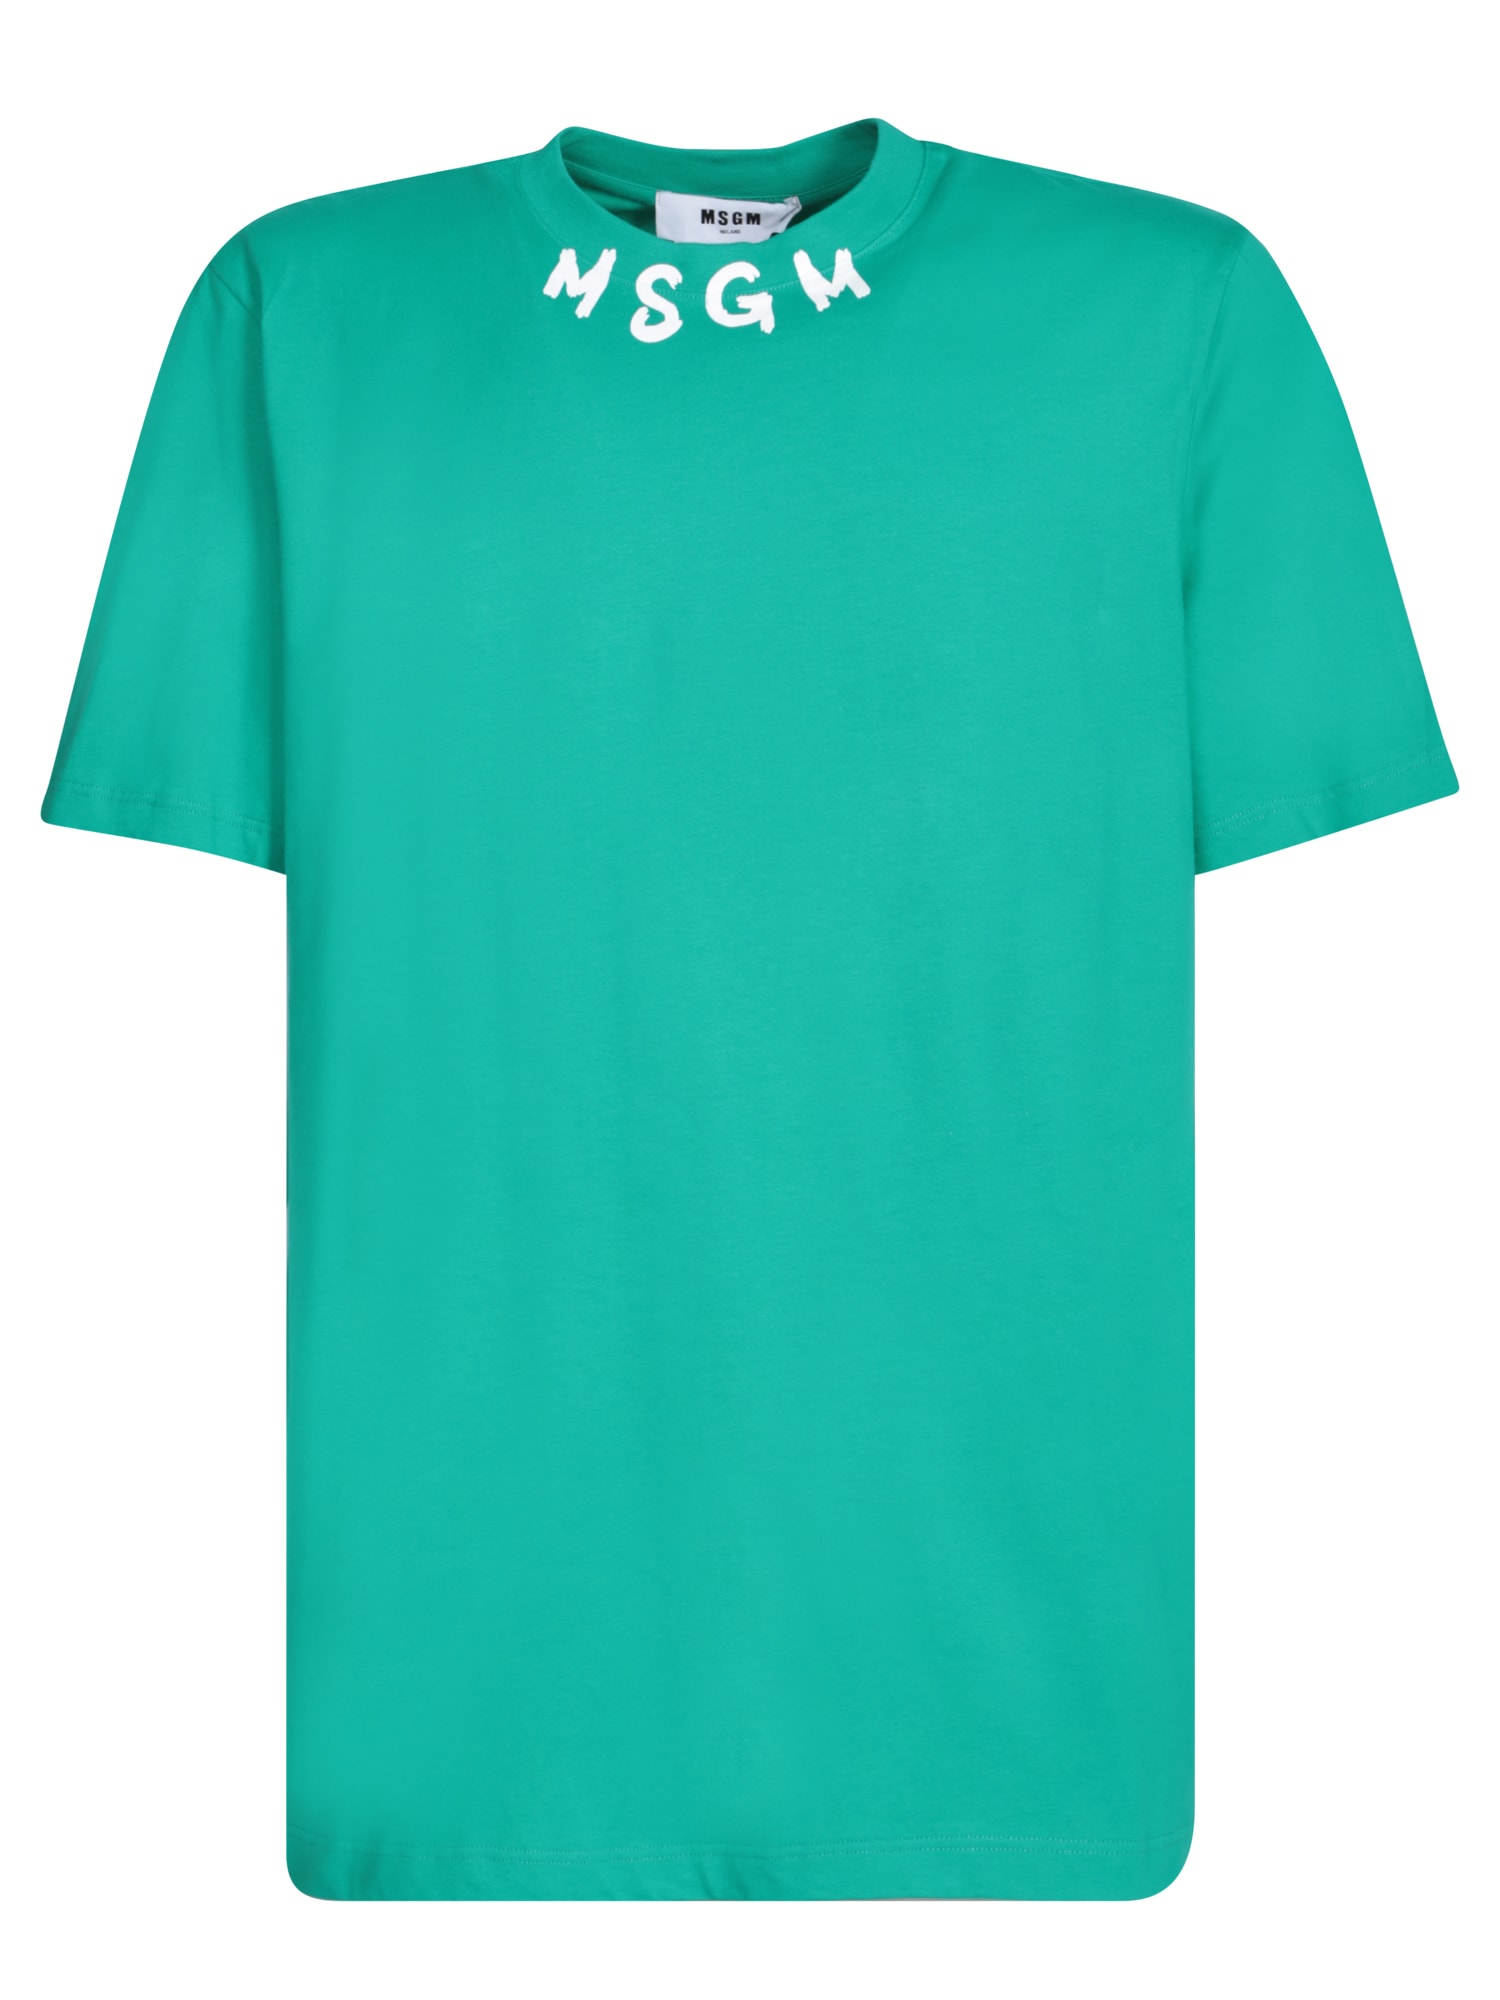 MSGM LOGO ON THE NECK GREEN T-SHIRT